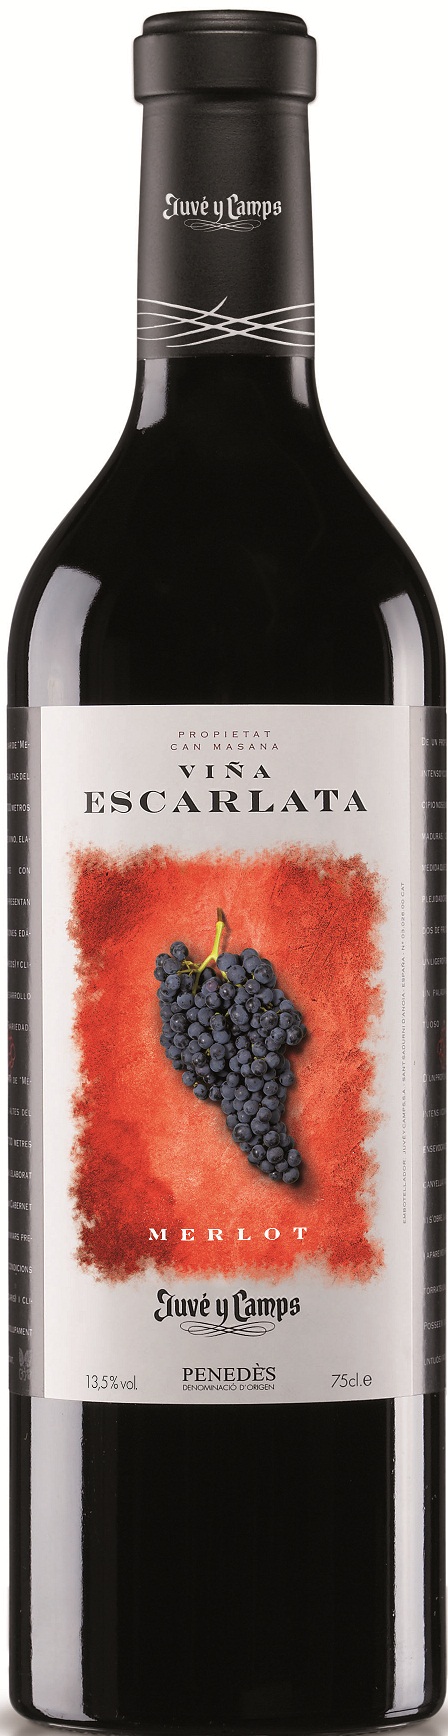 Image of Wine bottle Viña Escarlata